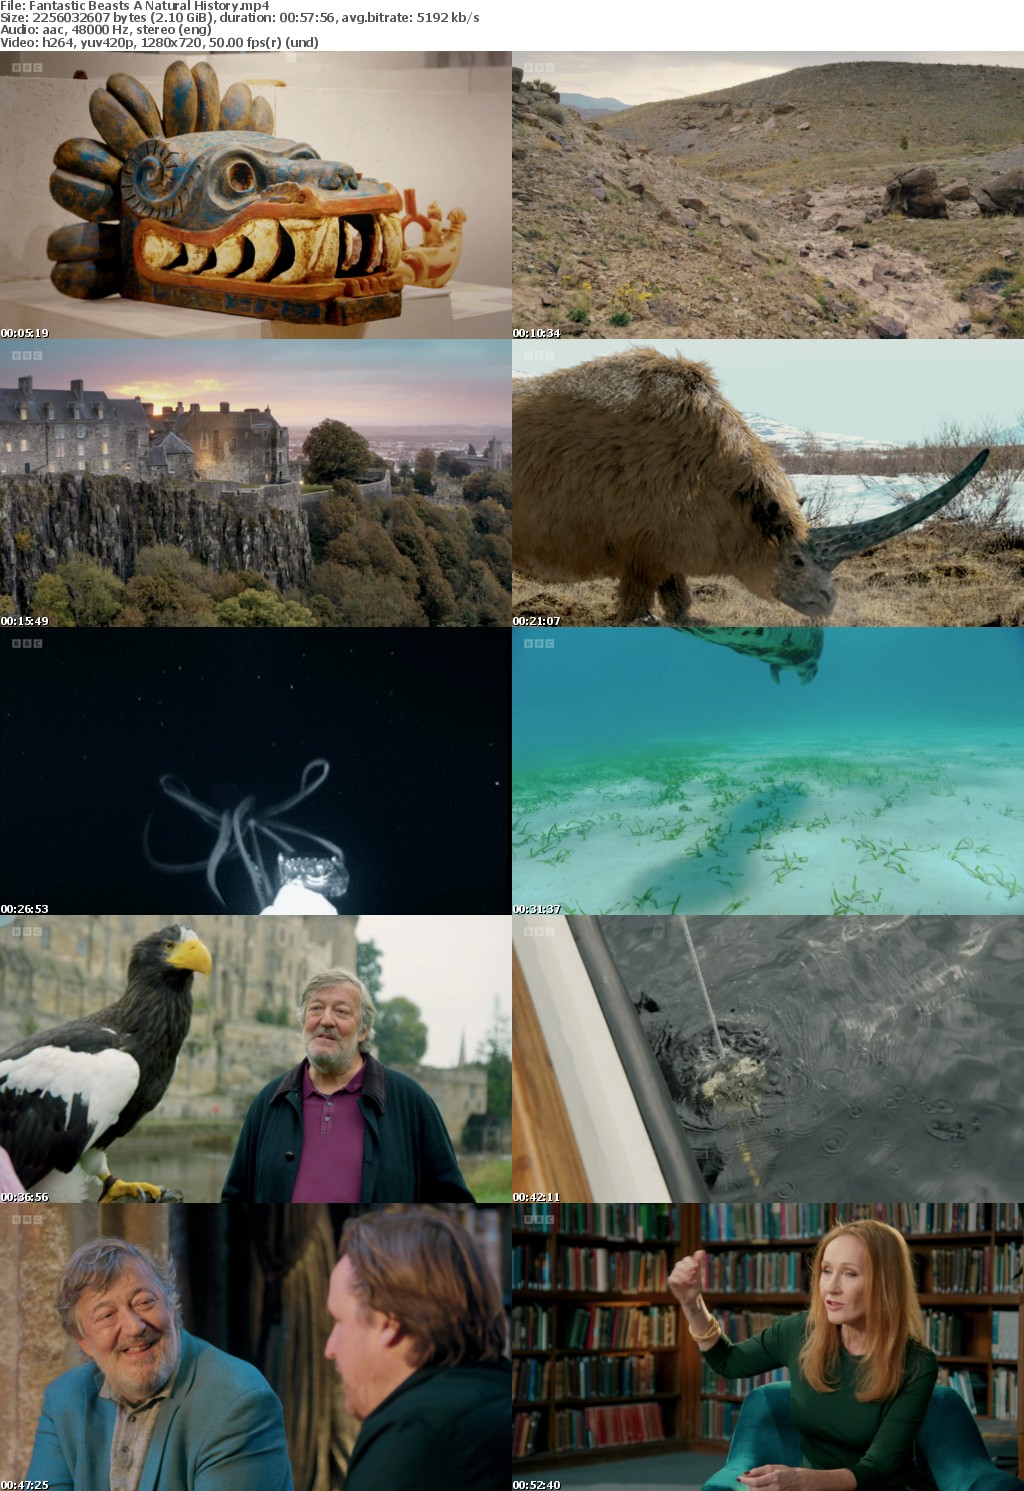 Fantastic Beasts A Natural History (1280x720p HD, 50fps, soft Eng subs)